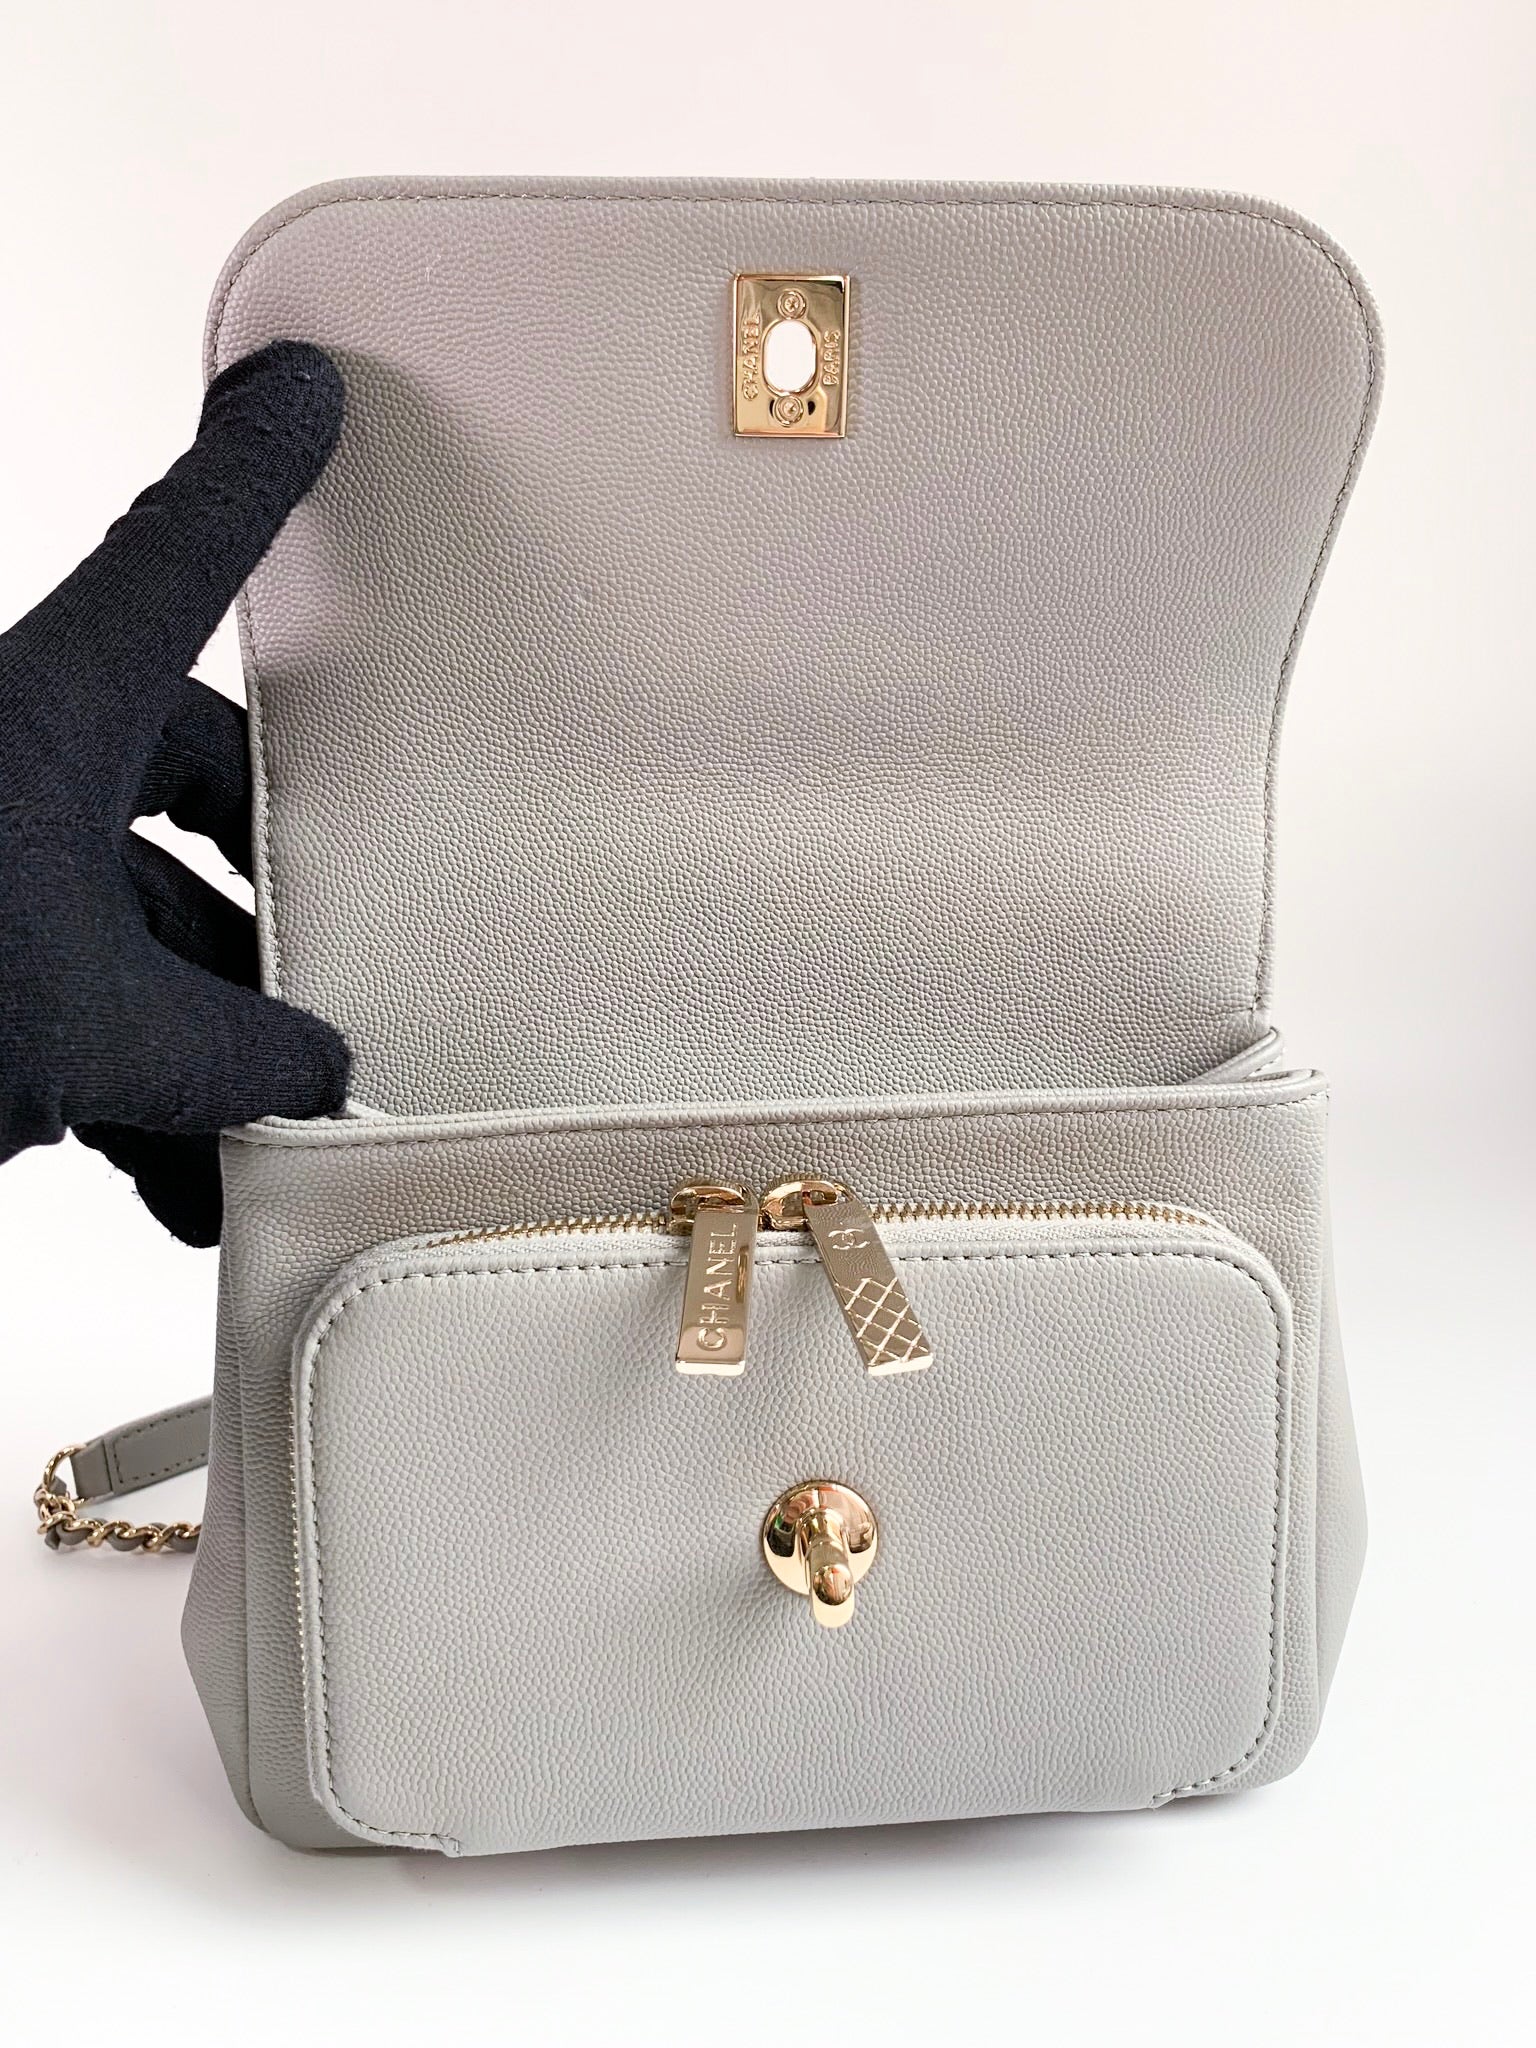 Chanel Seasonal Flap Bag, My Perfect Mini, White Lambskin Leather, Gold  Hardware, Pearl and Leather Strap, New in Box WA001